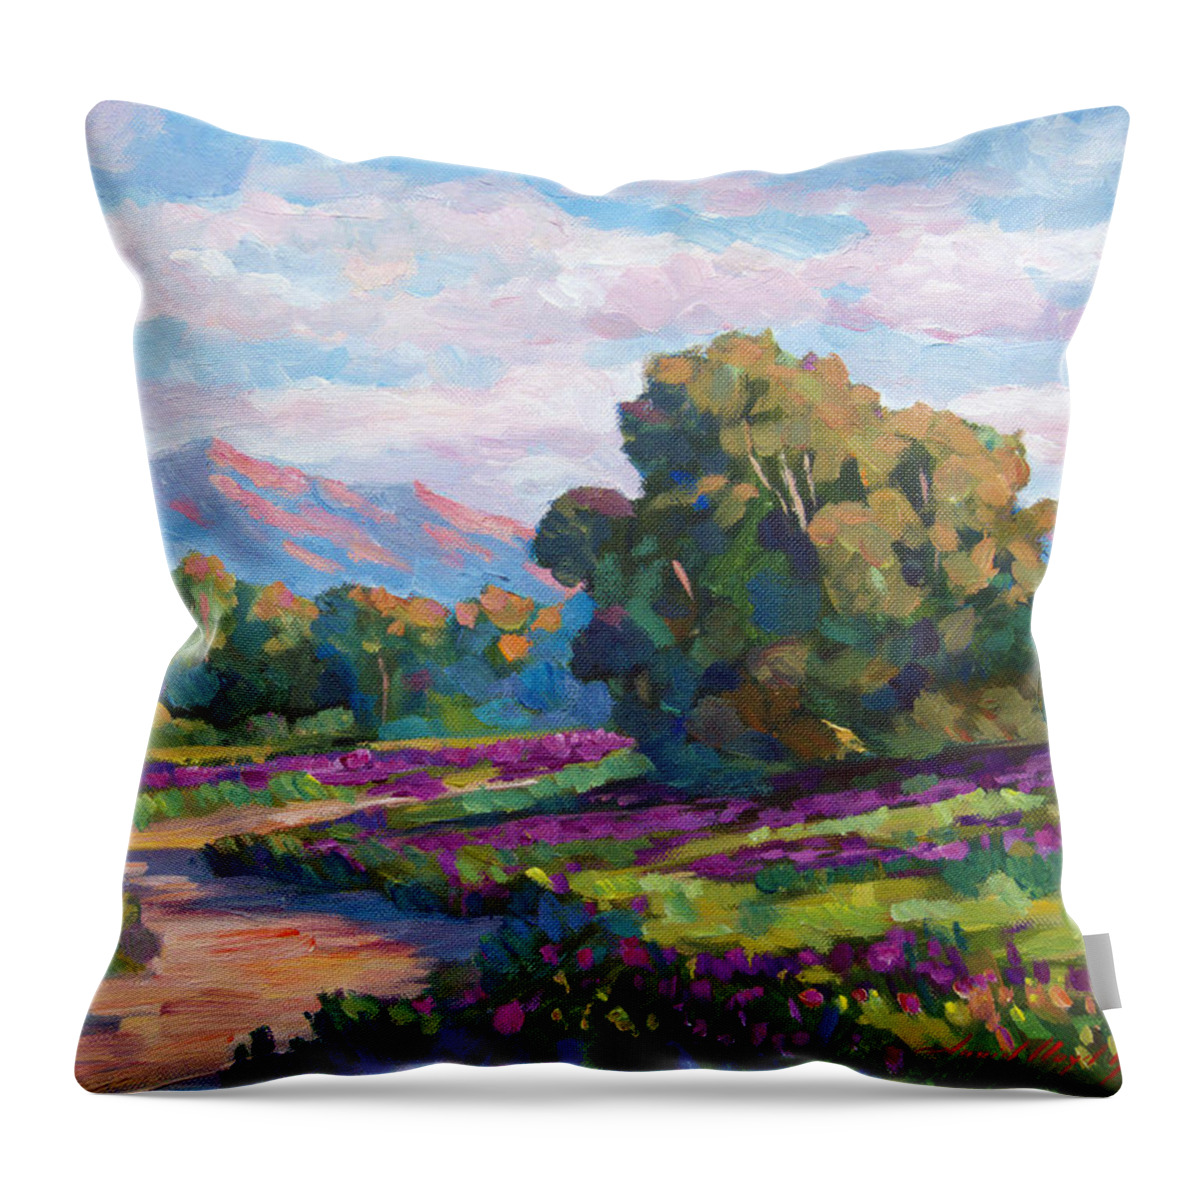 Landscape Throw Pillow featuring the painting California Hills - Plein Air by David Lloyd Glover